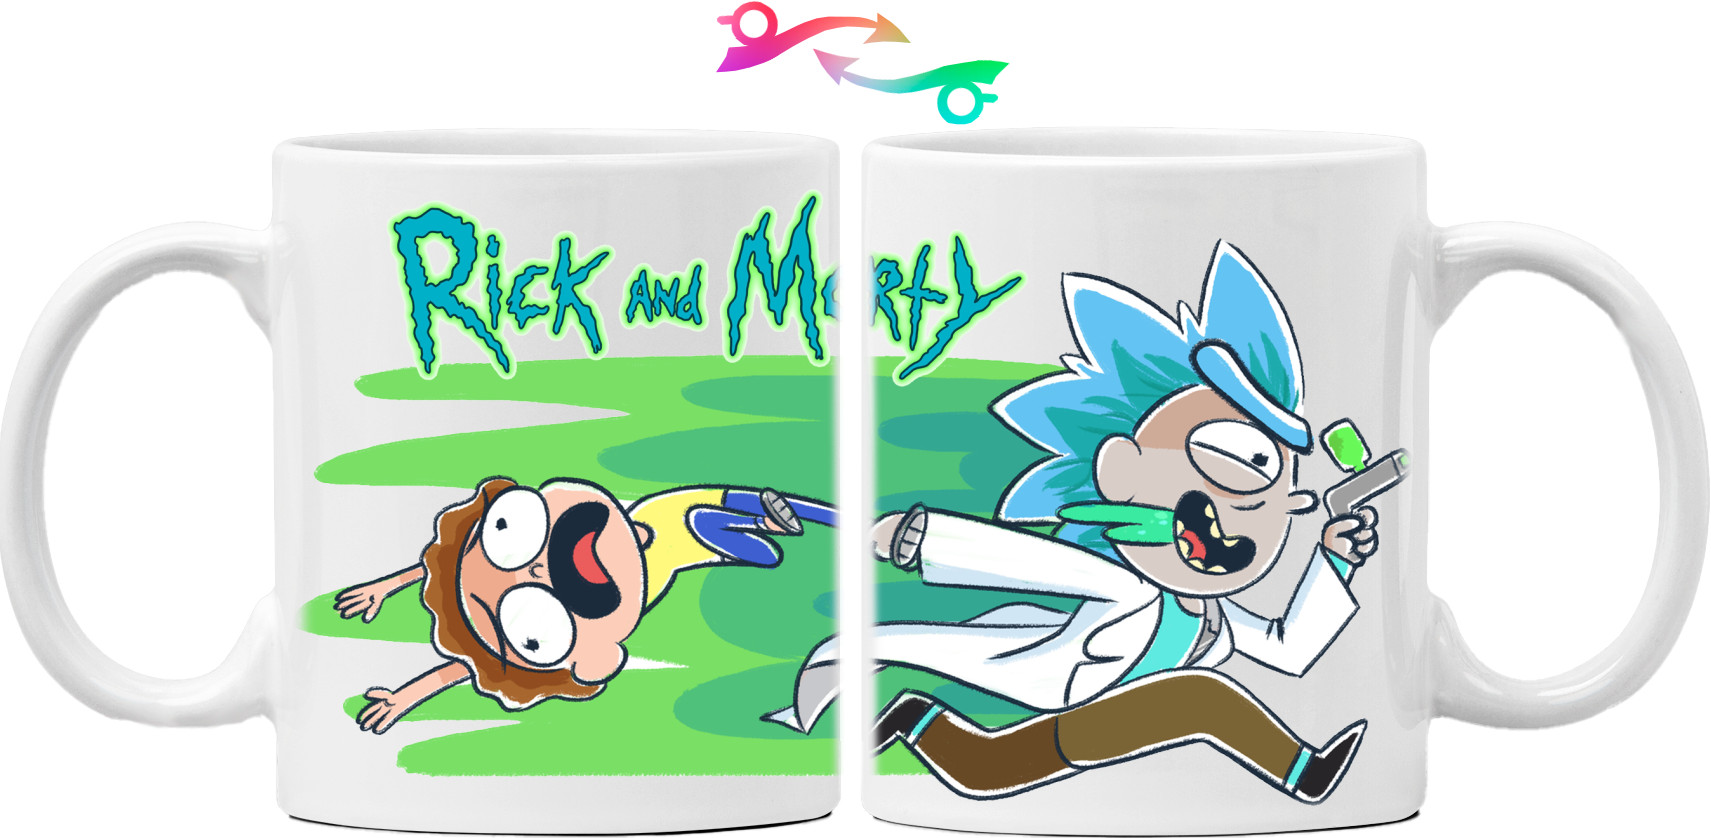 Rick and Morty art 17